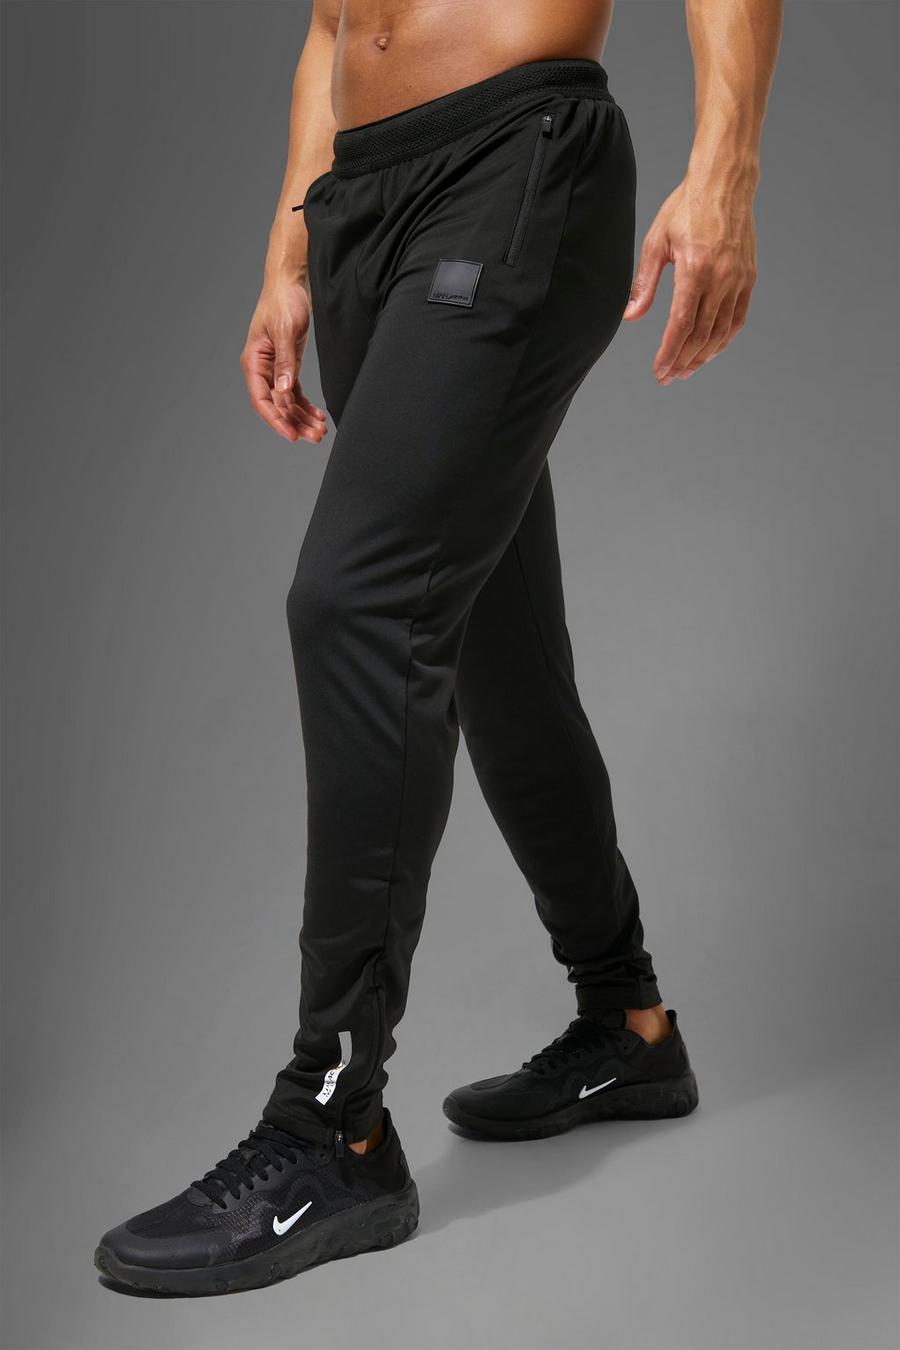 Pantaloni tuta Man Active per alta performance, Black nero